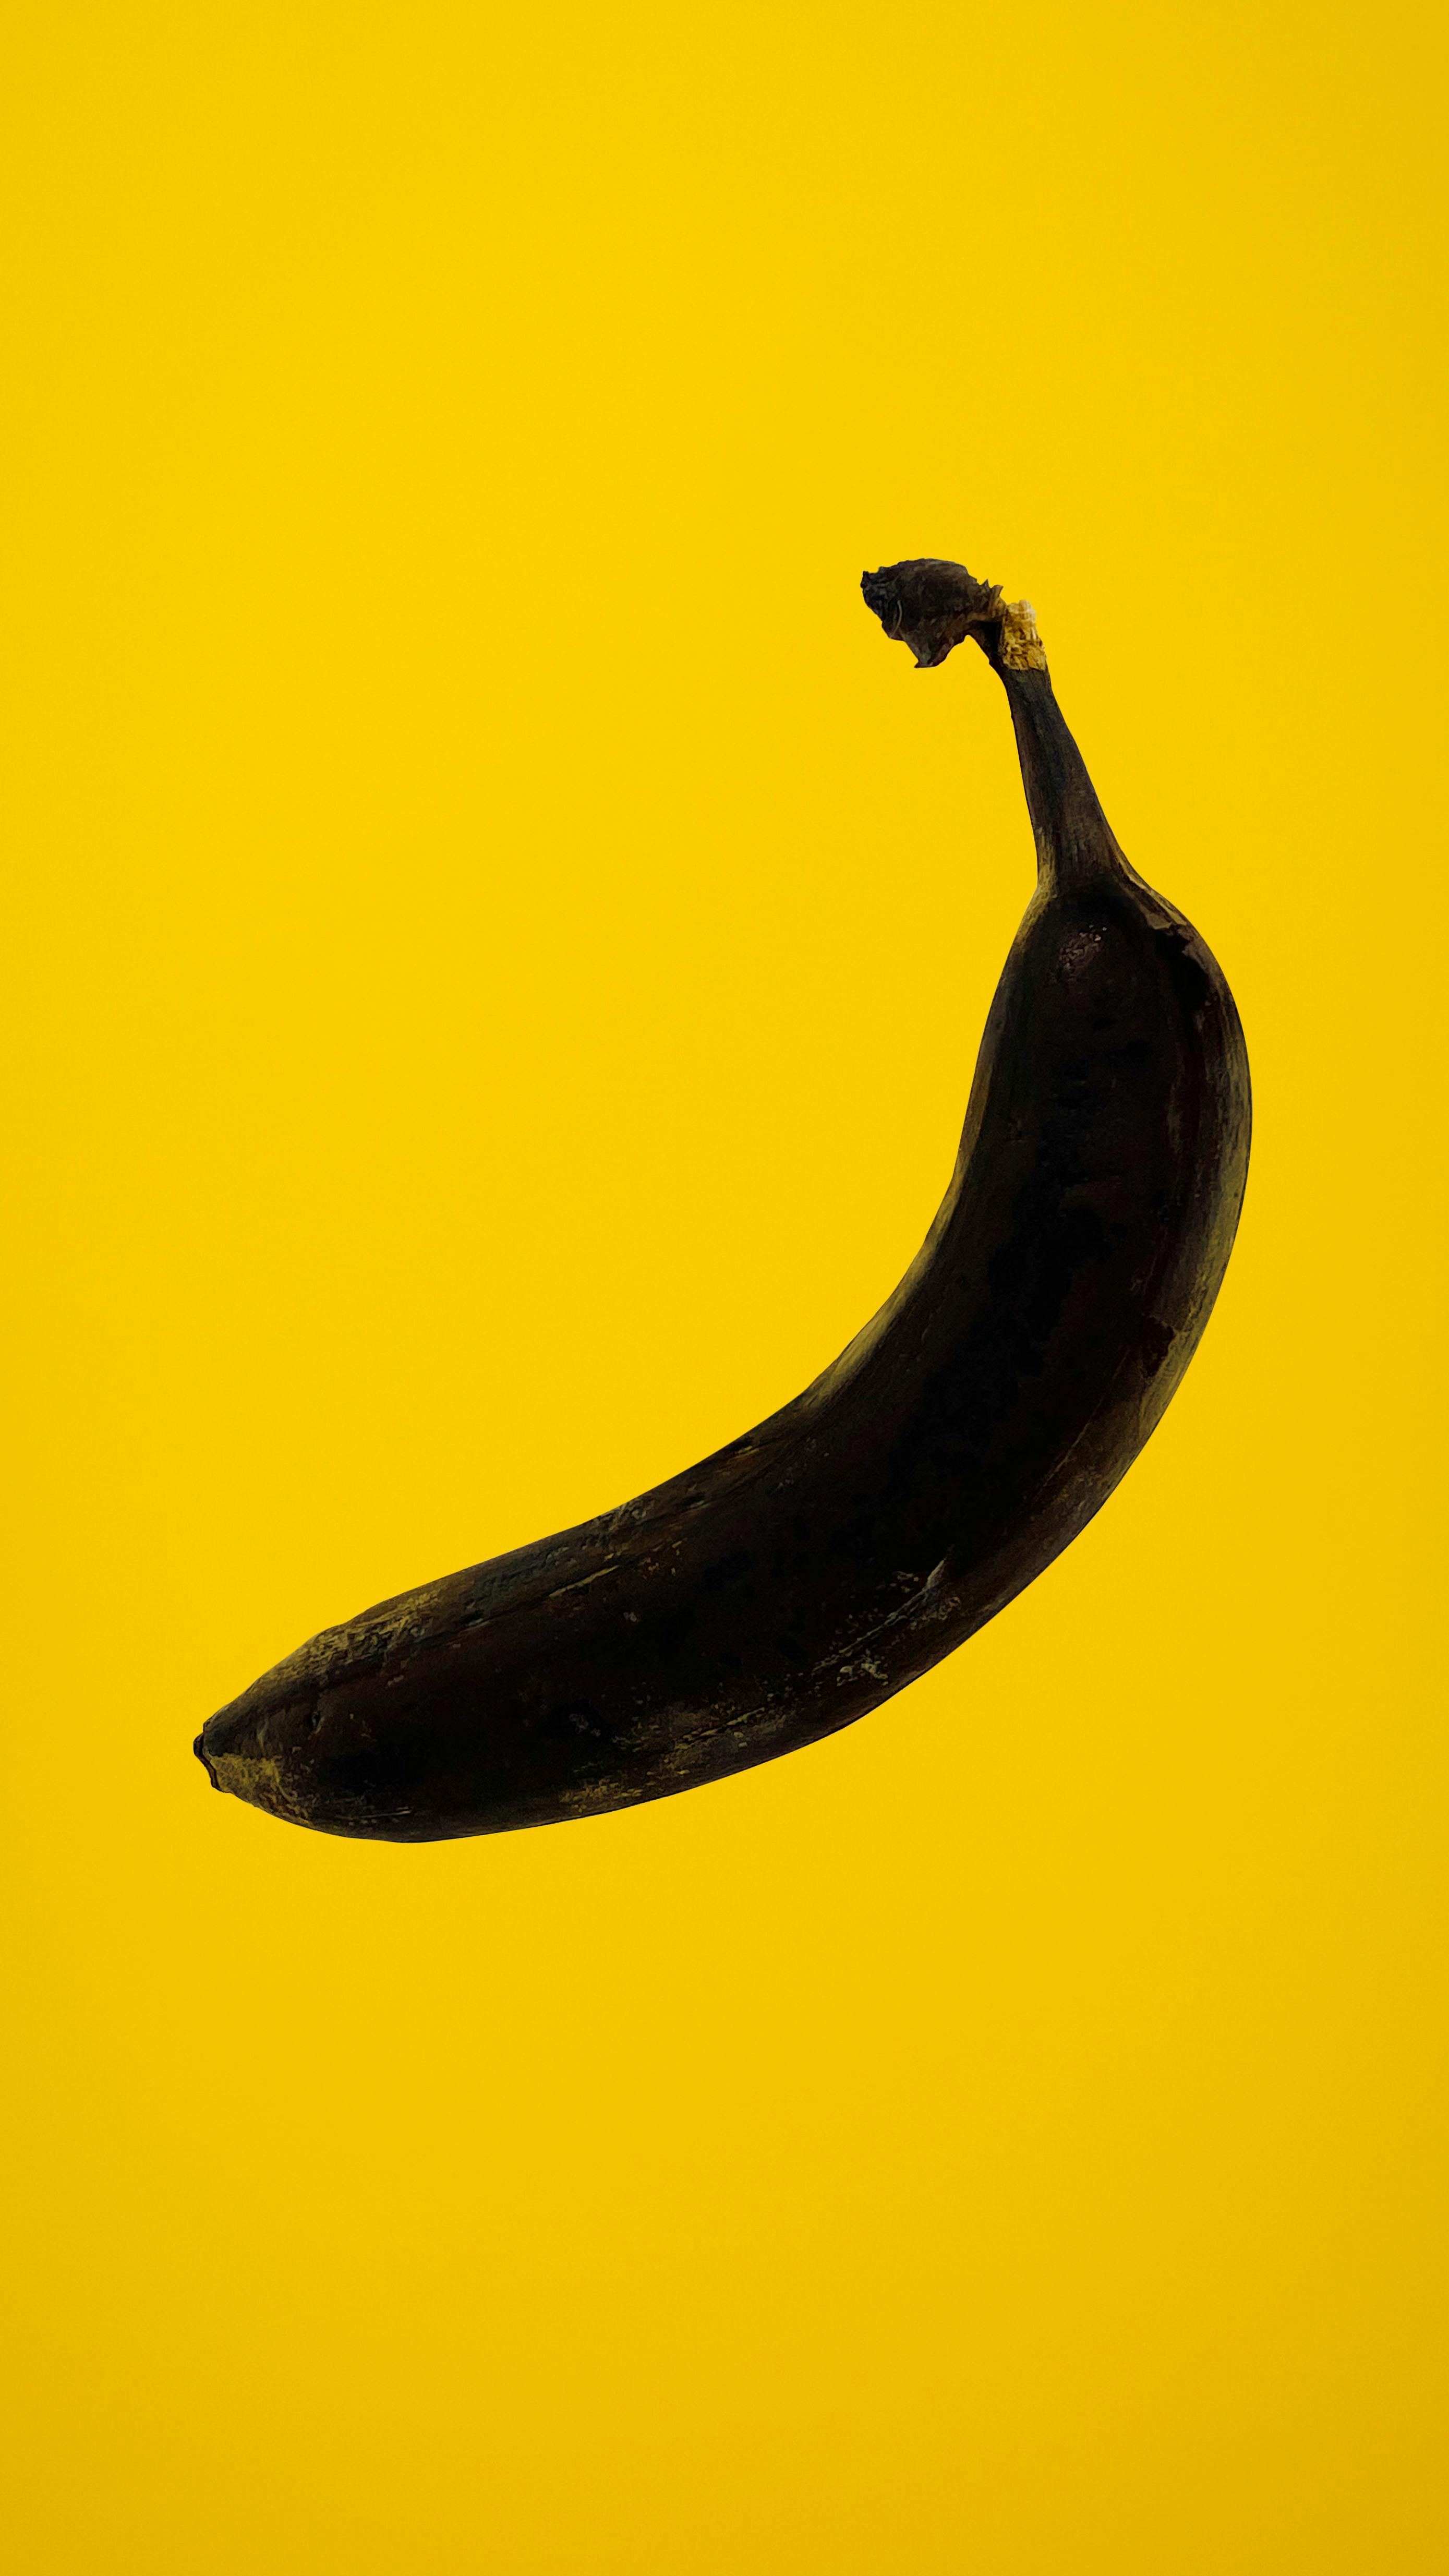 Rotten Banana on Yellow Background · Free Stock Photo